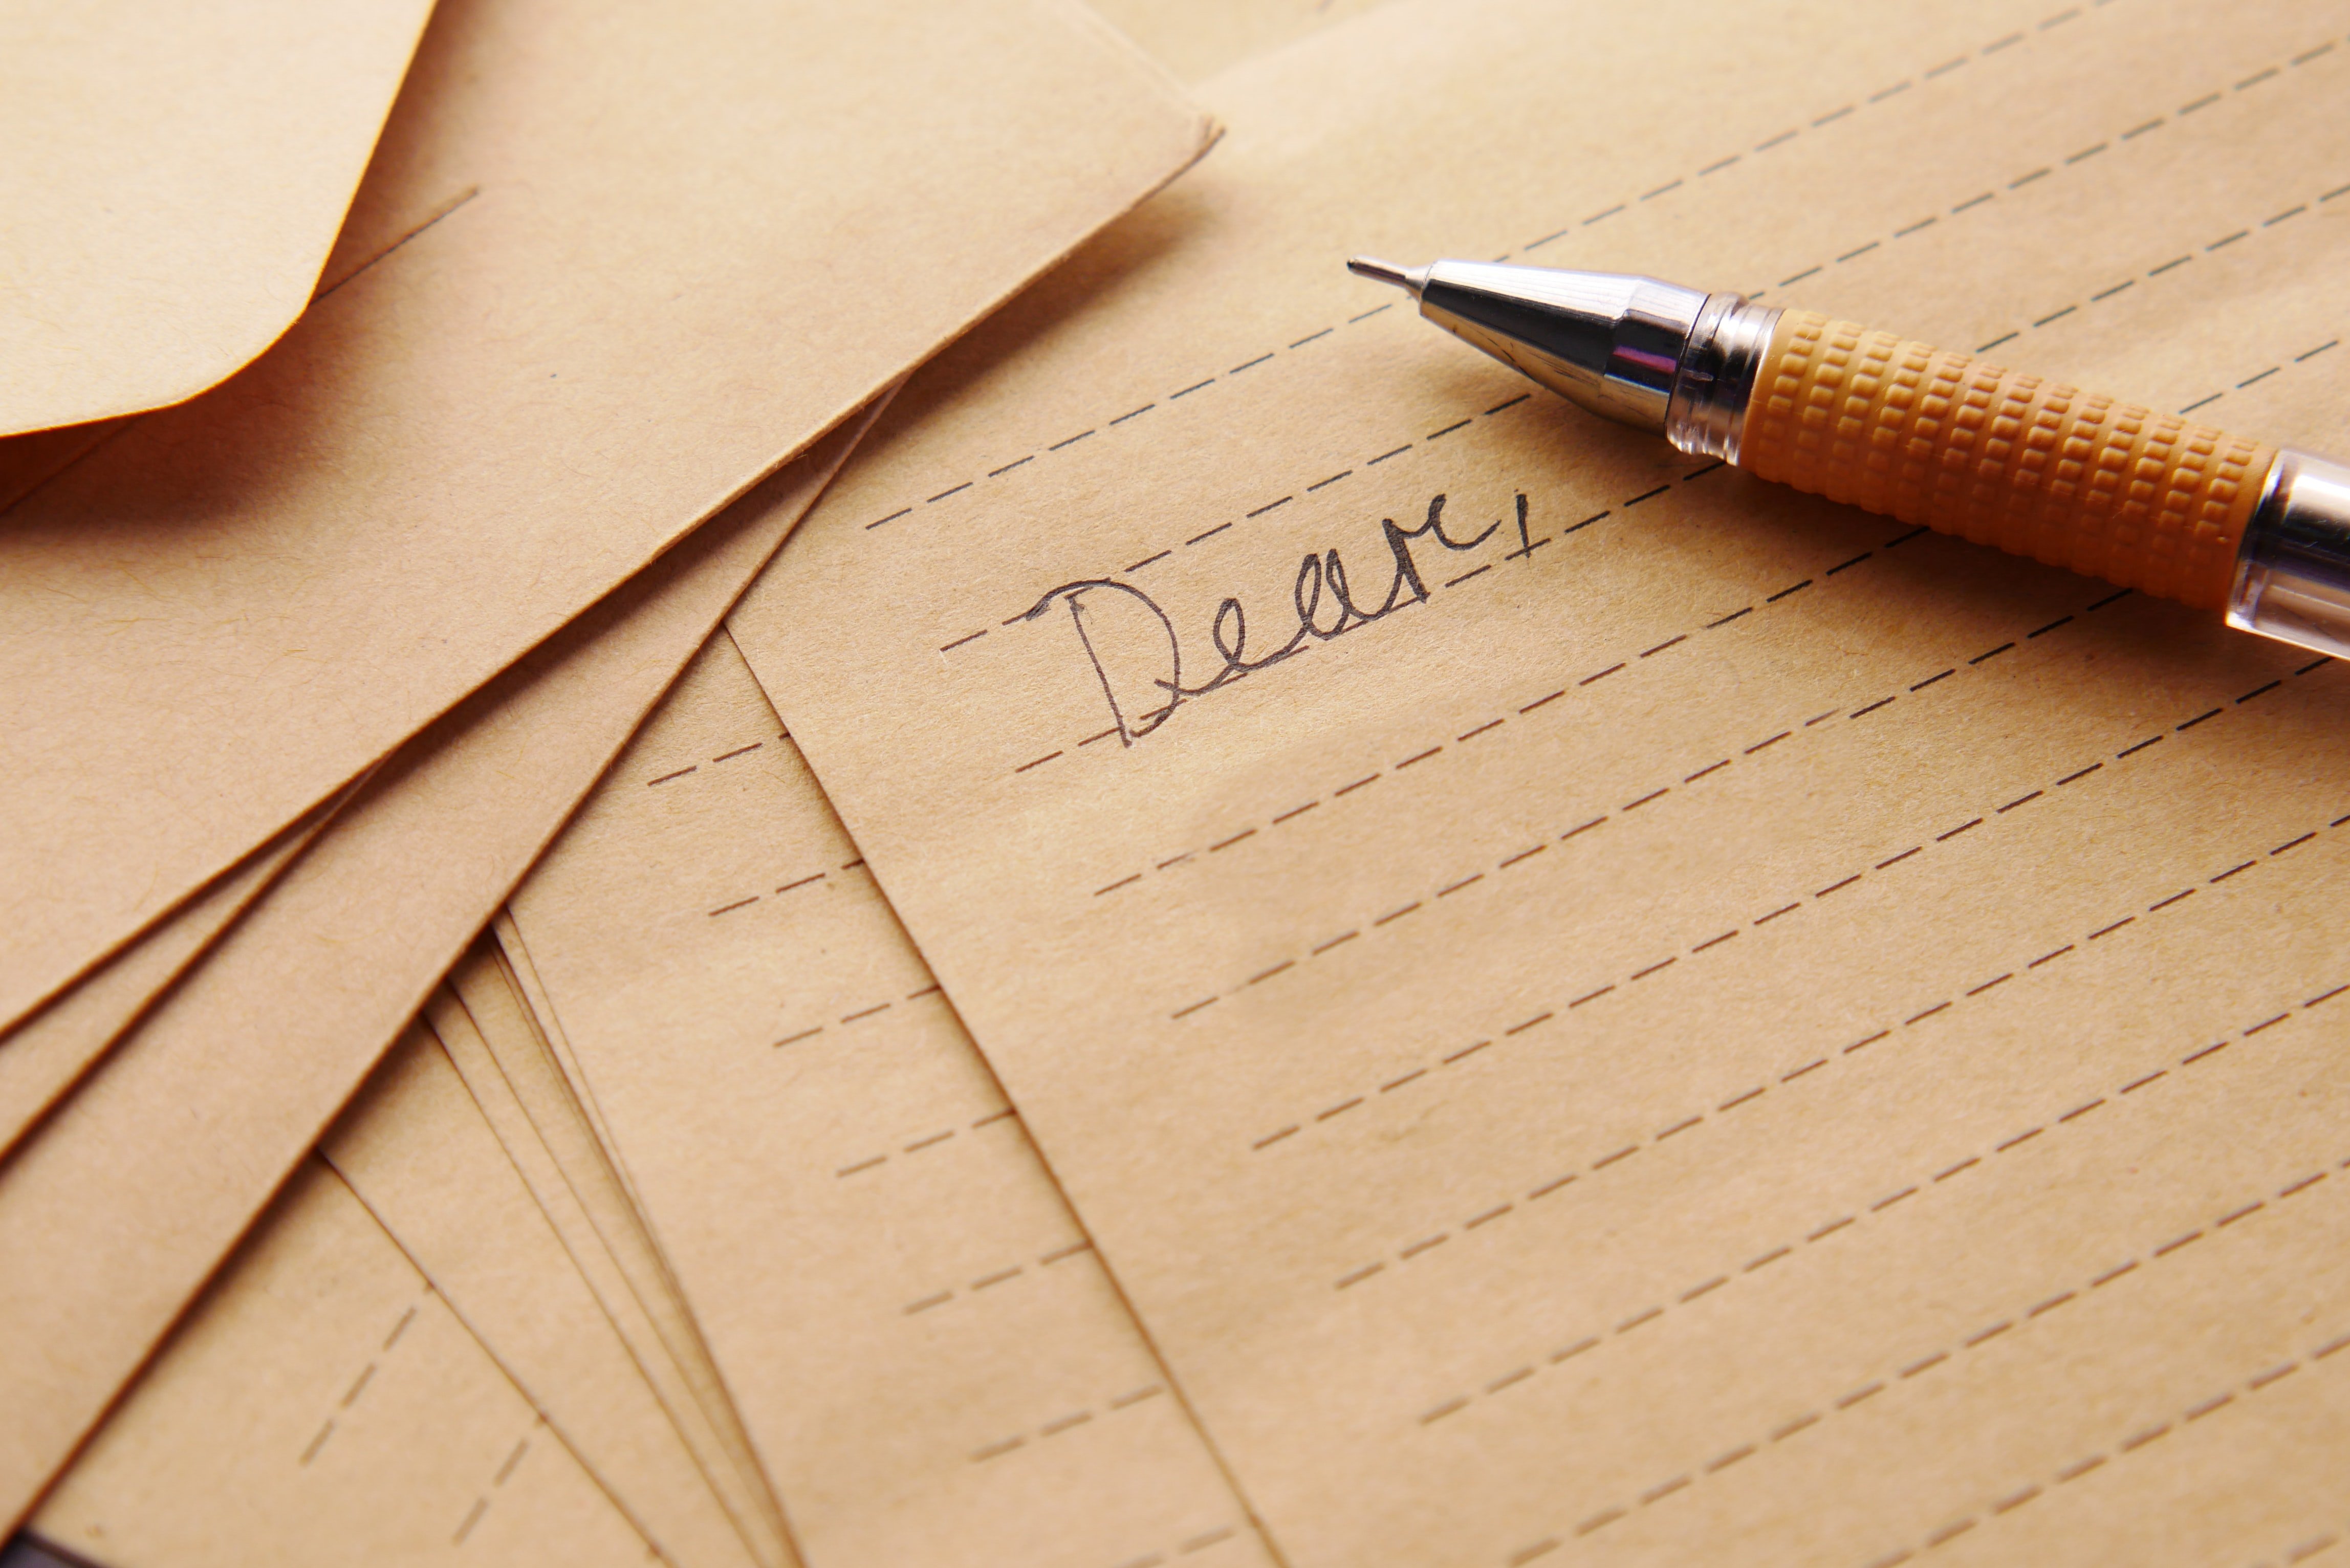 Brad left Marlene a letter promising he'd be back. | Source: Unsplash